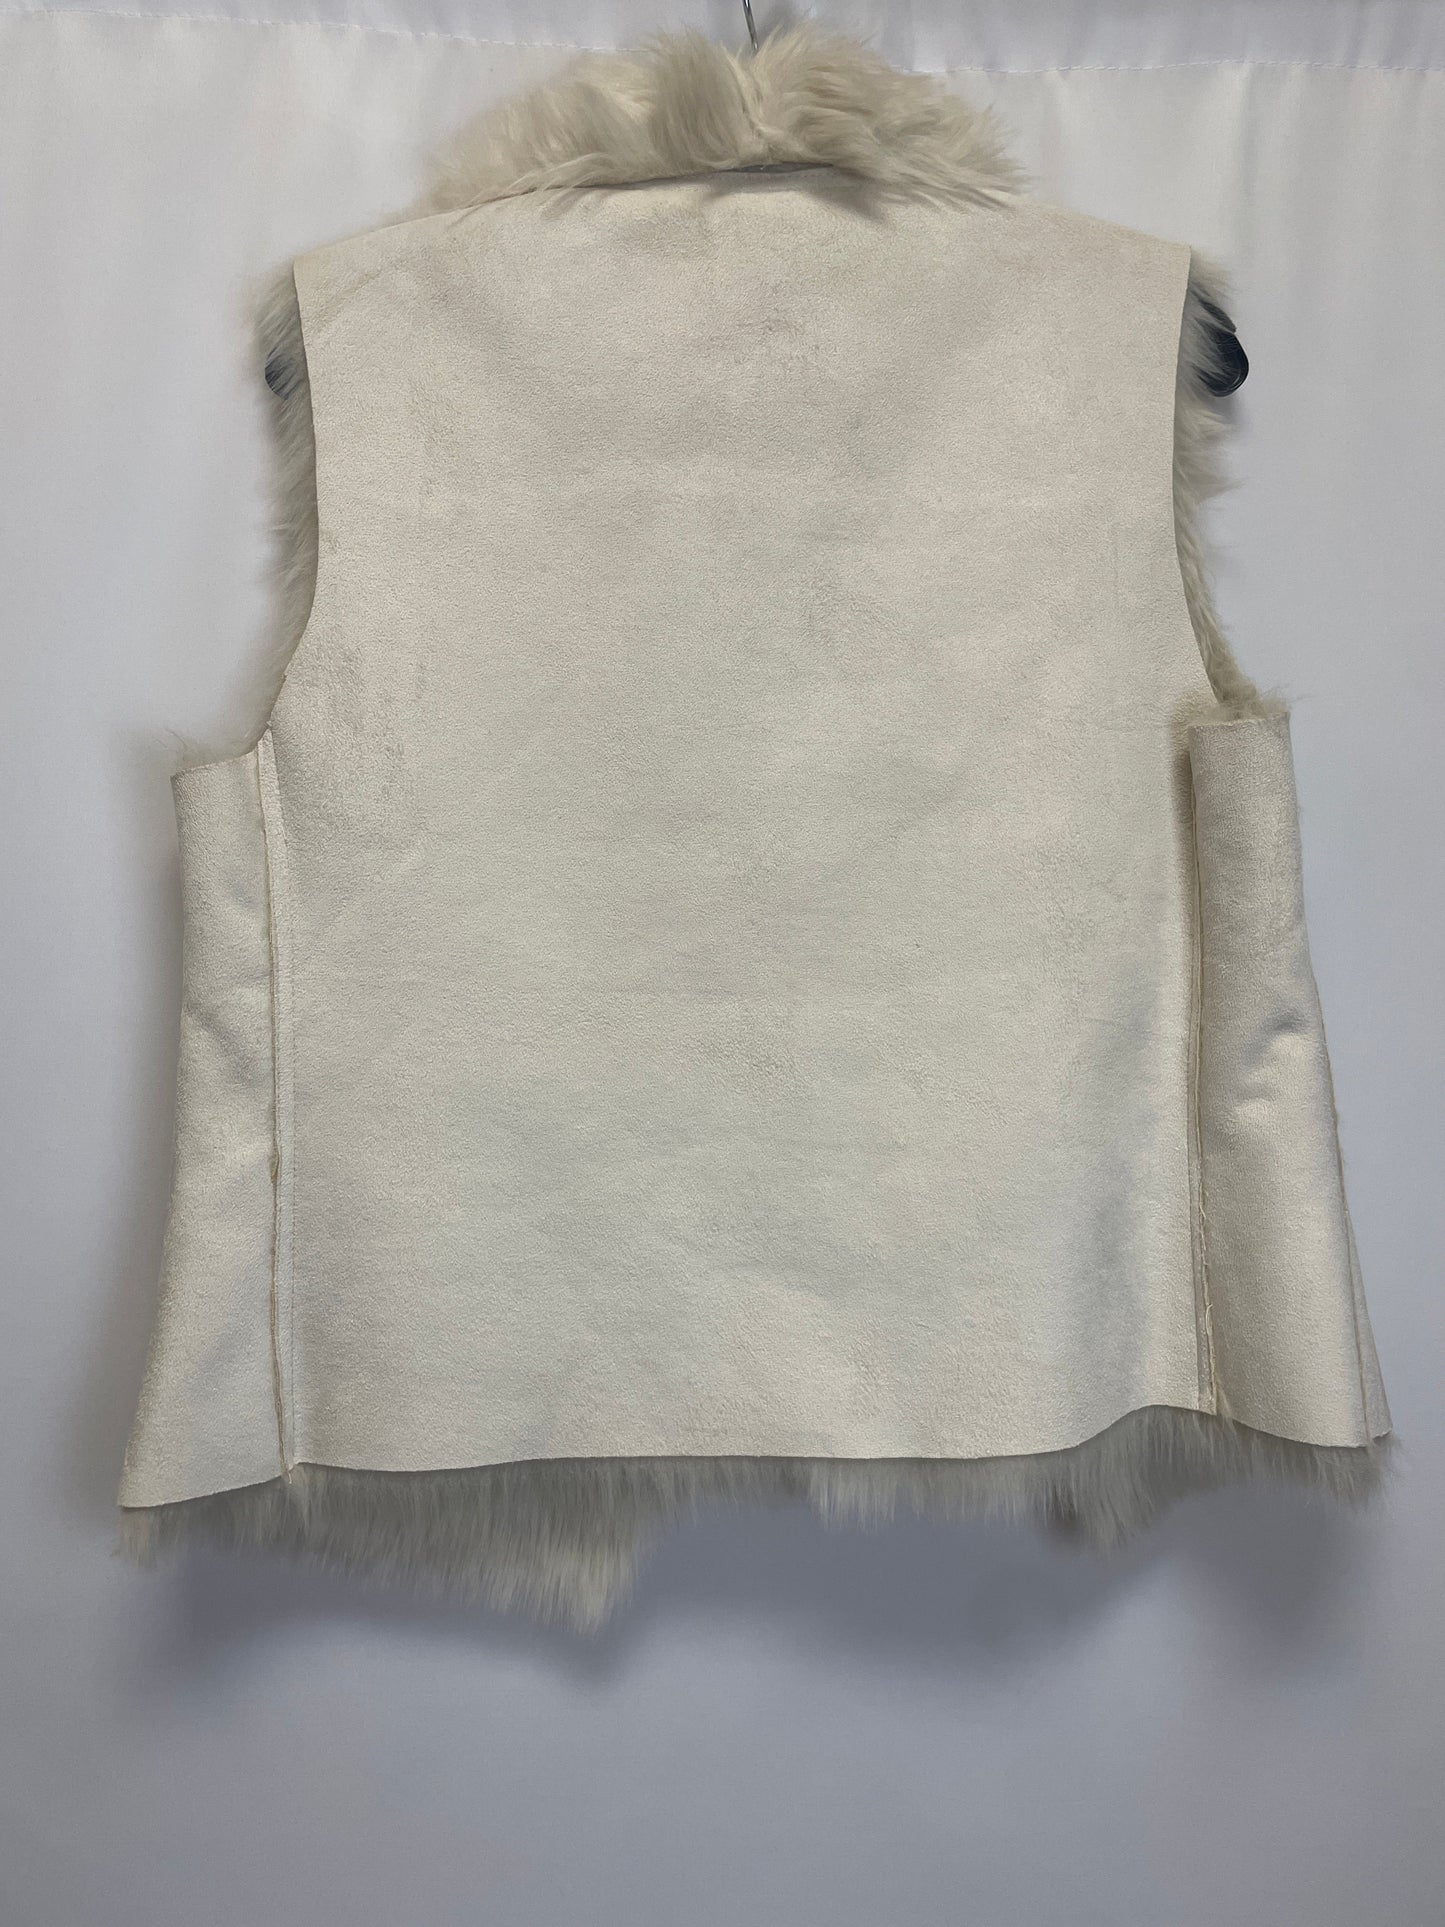 Vest Faux Fur & Sherpa By Jennifer Lopez  Size: M